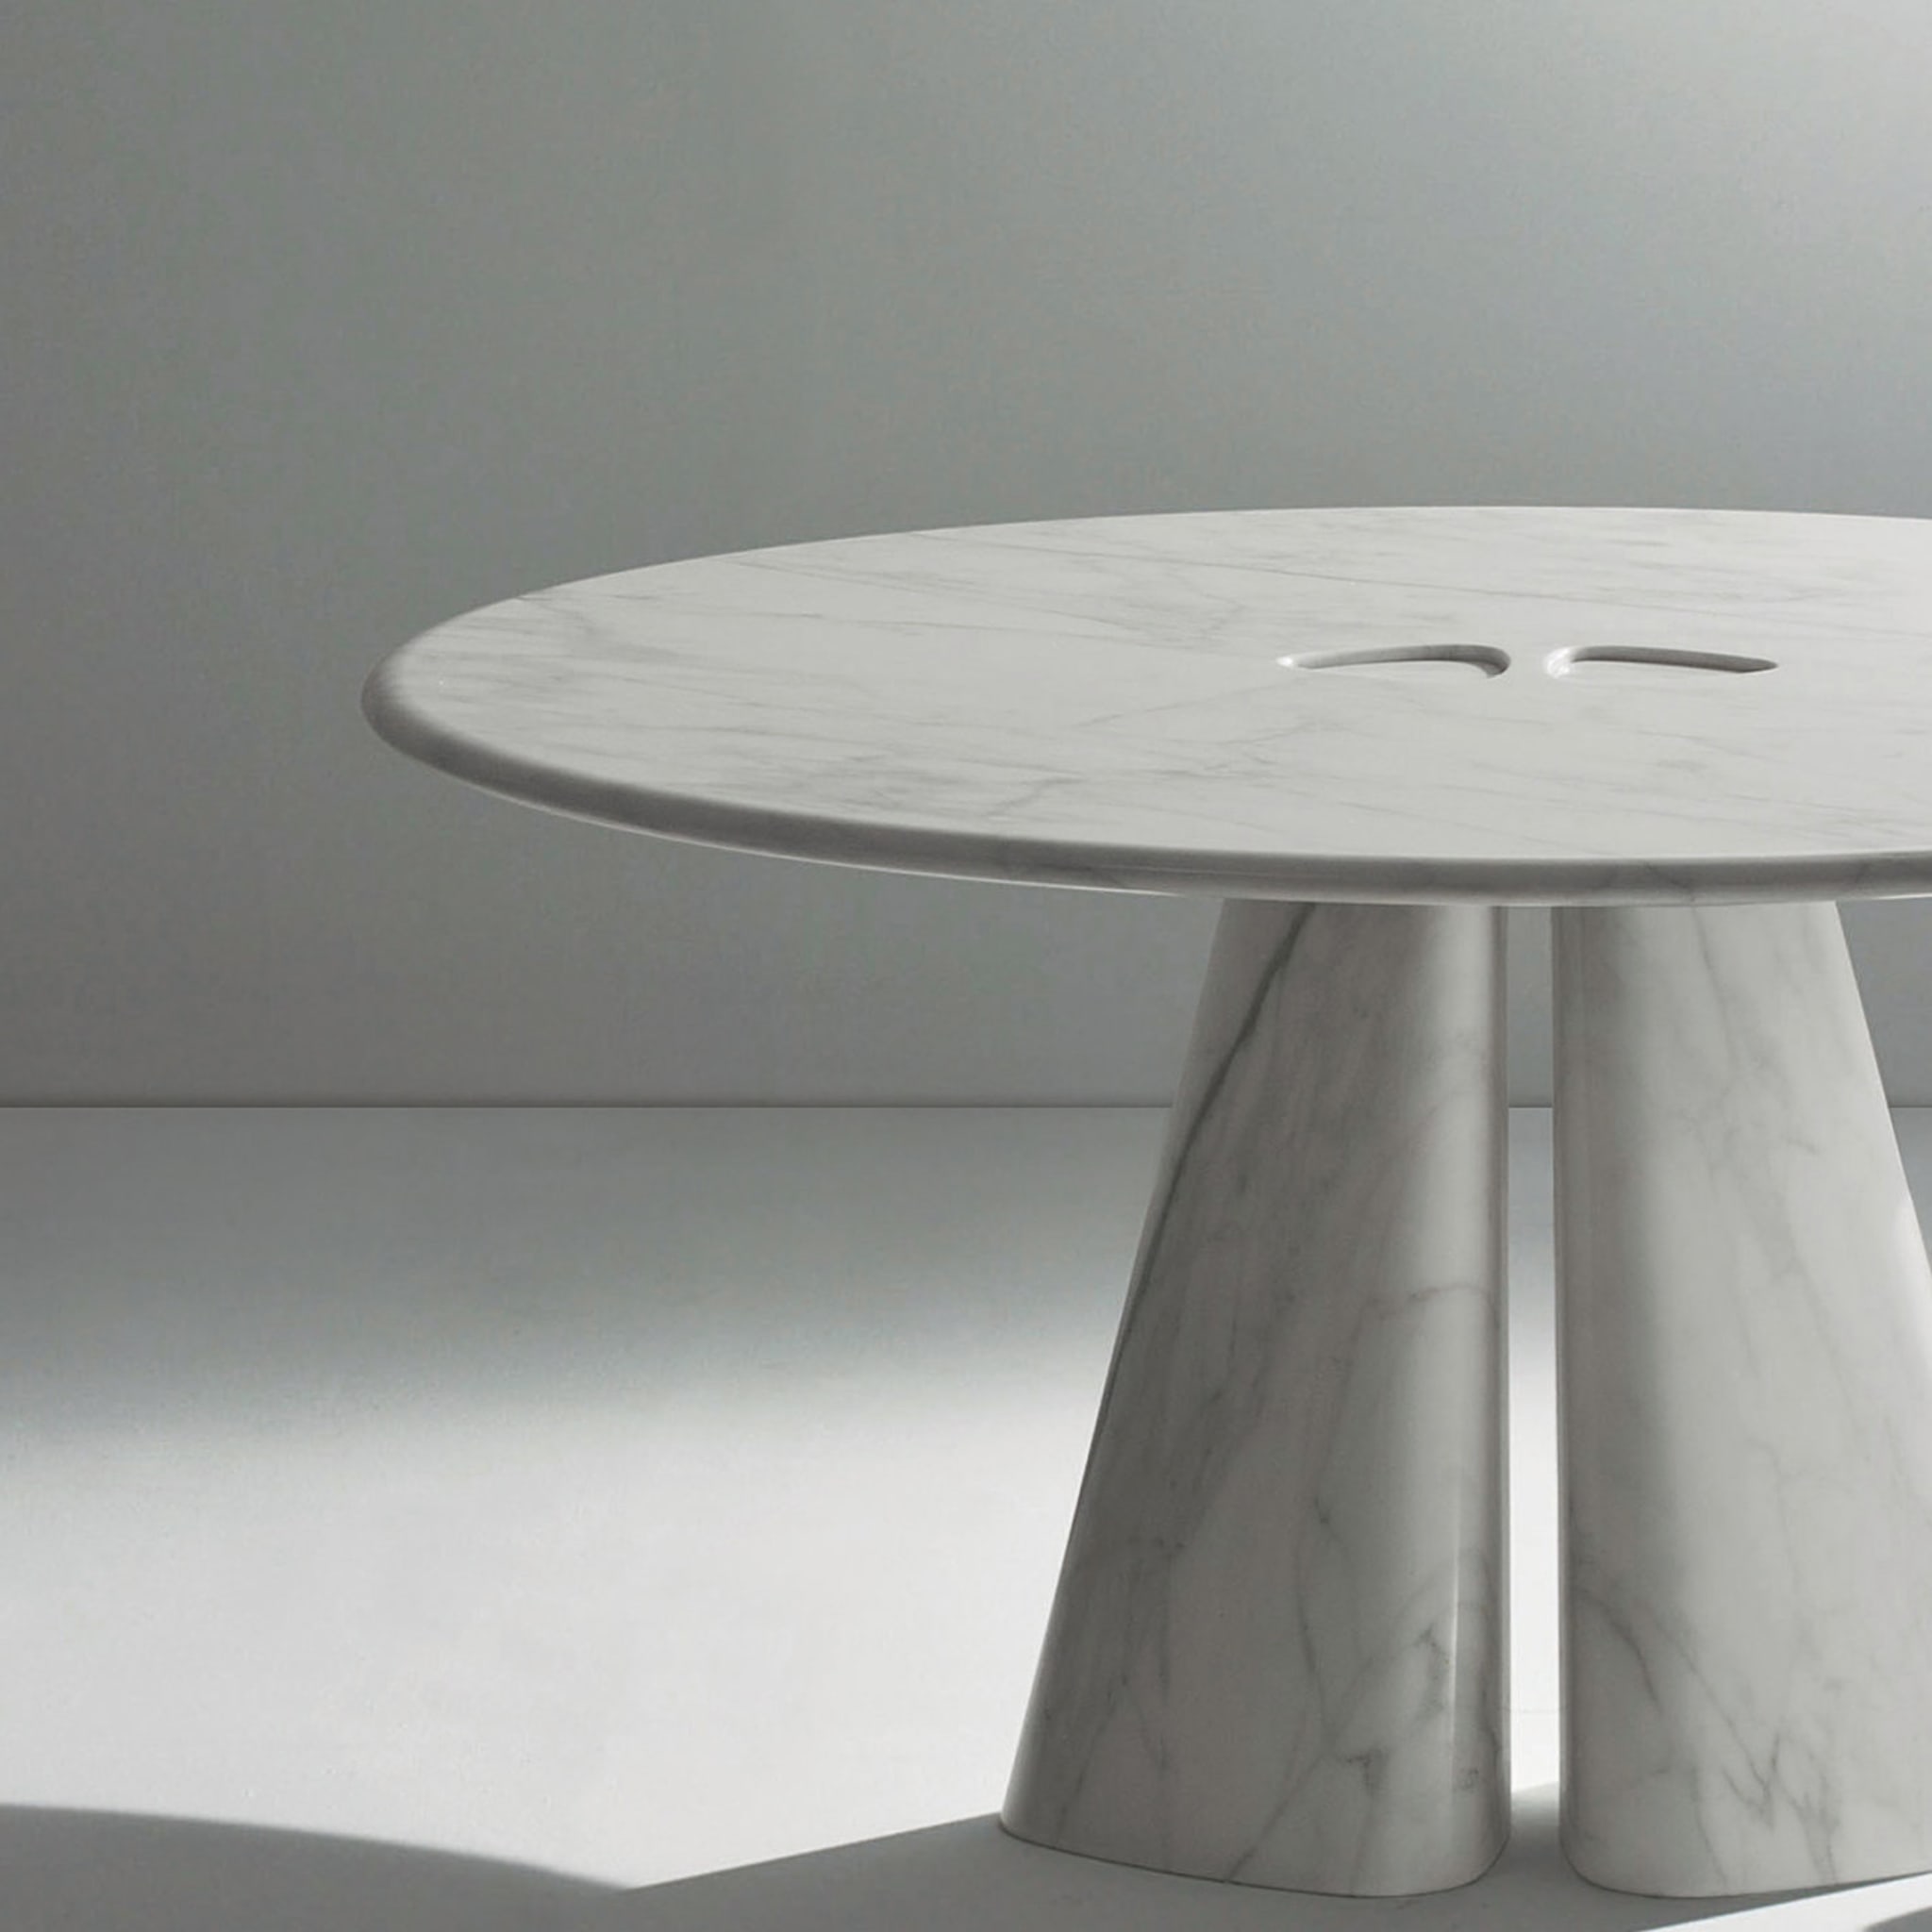 Raja Round Table by Bartoli Design - Alternative view 4